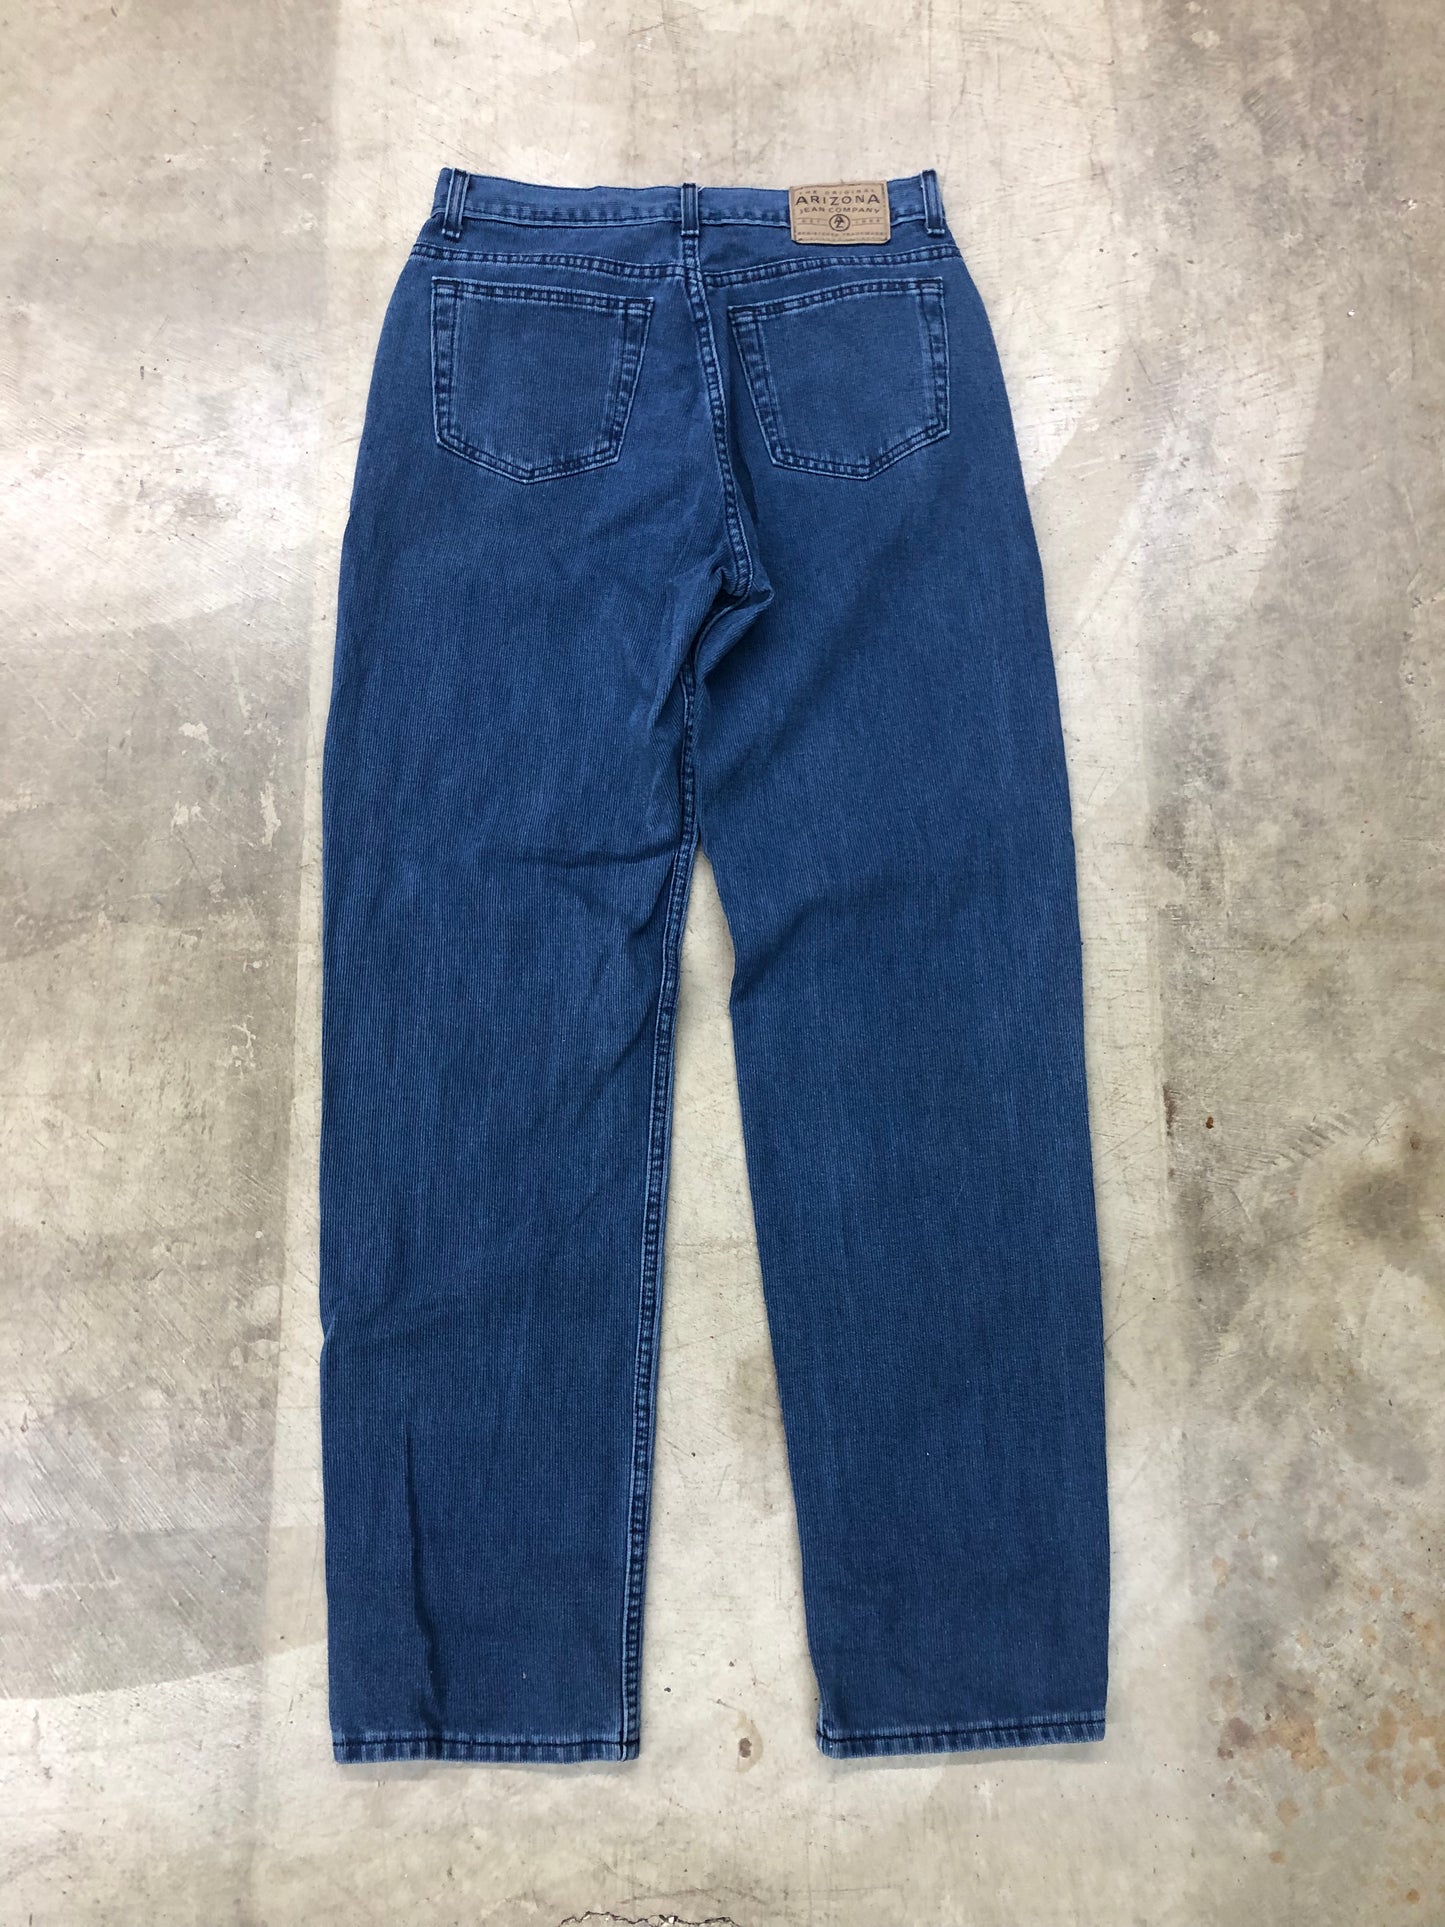 VTG Arizona Straight Leg Lined Blue Jeans Sz 30x32